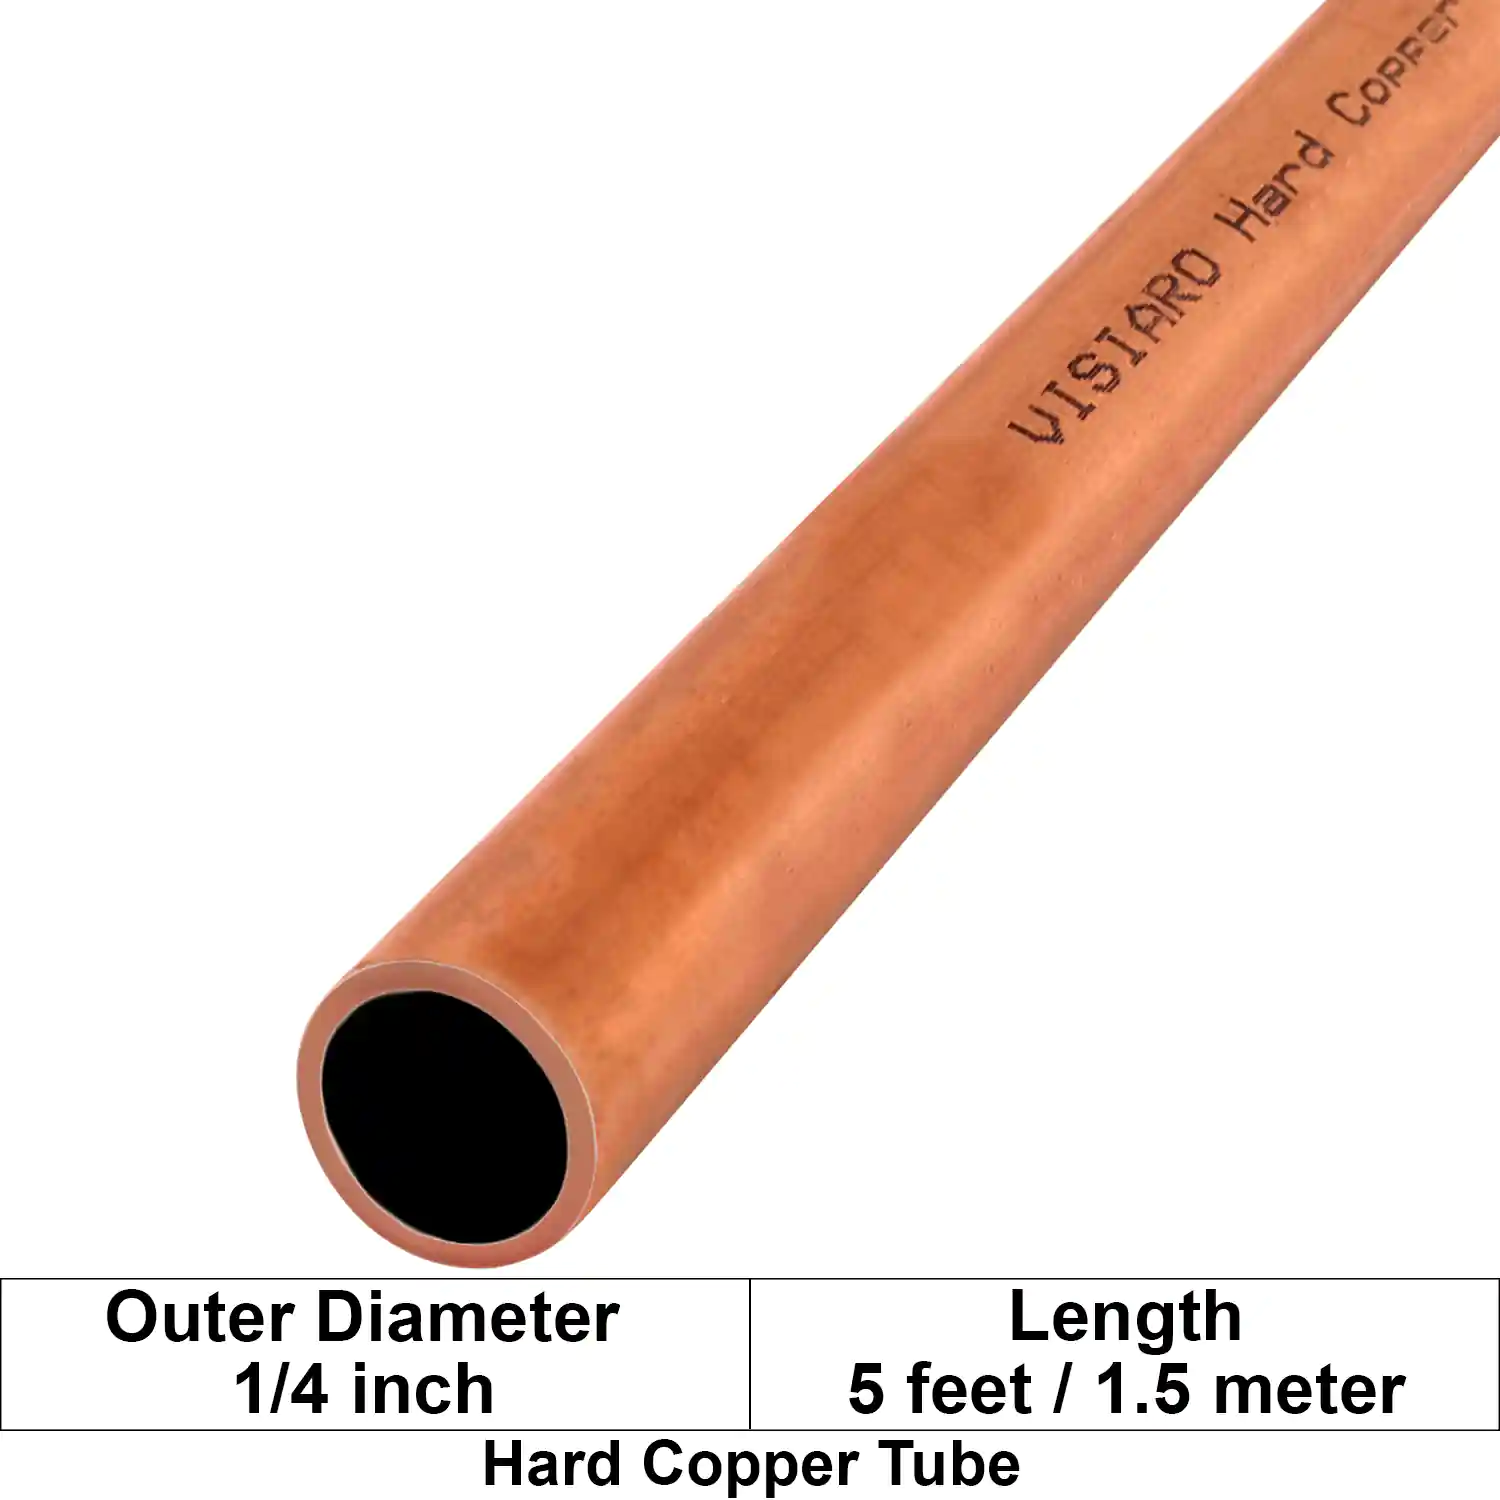 Visiaro Hard Copper Tube 5 feet long Outer Diameter - 1/4 inch